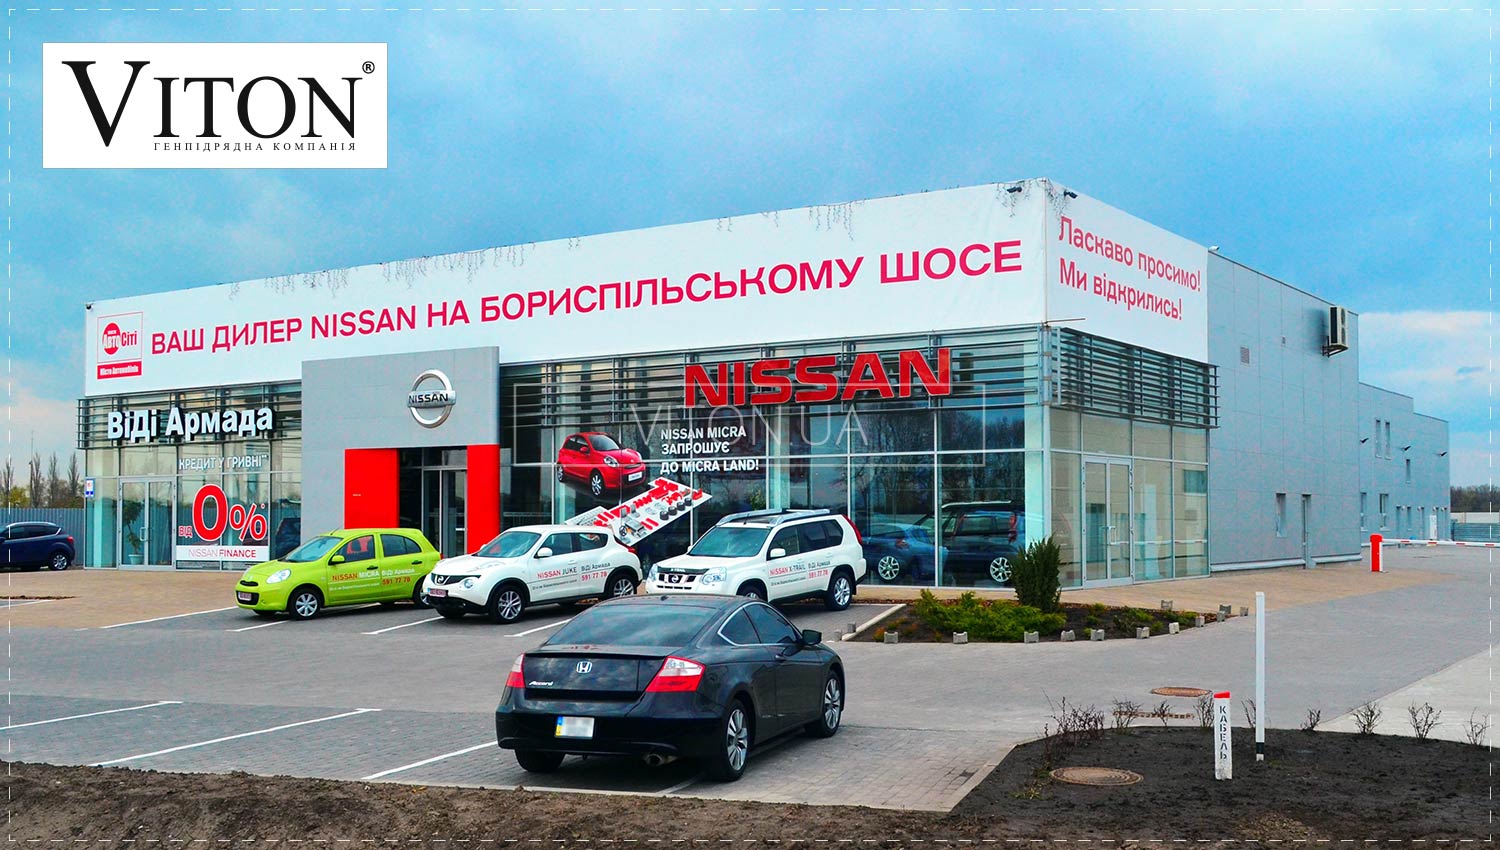 11 | Car showroom NISSAN